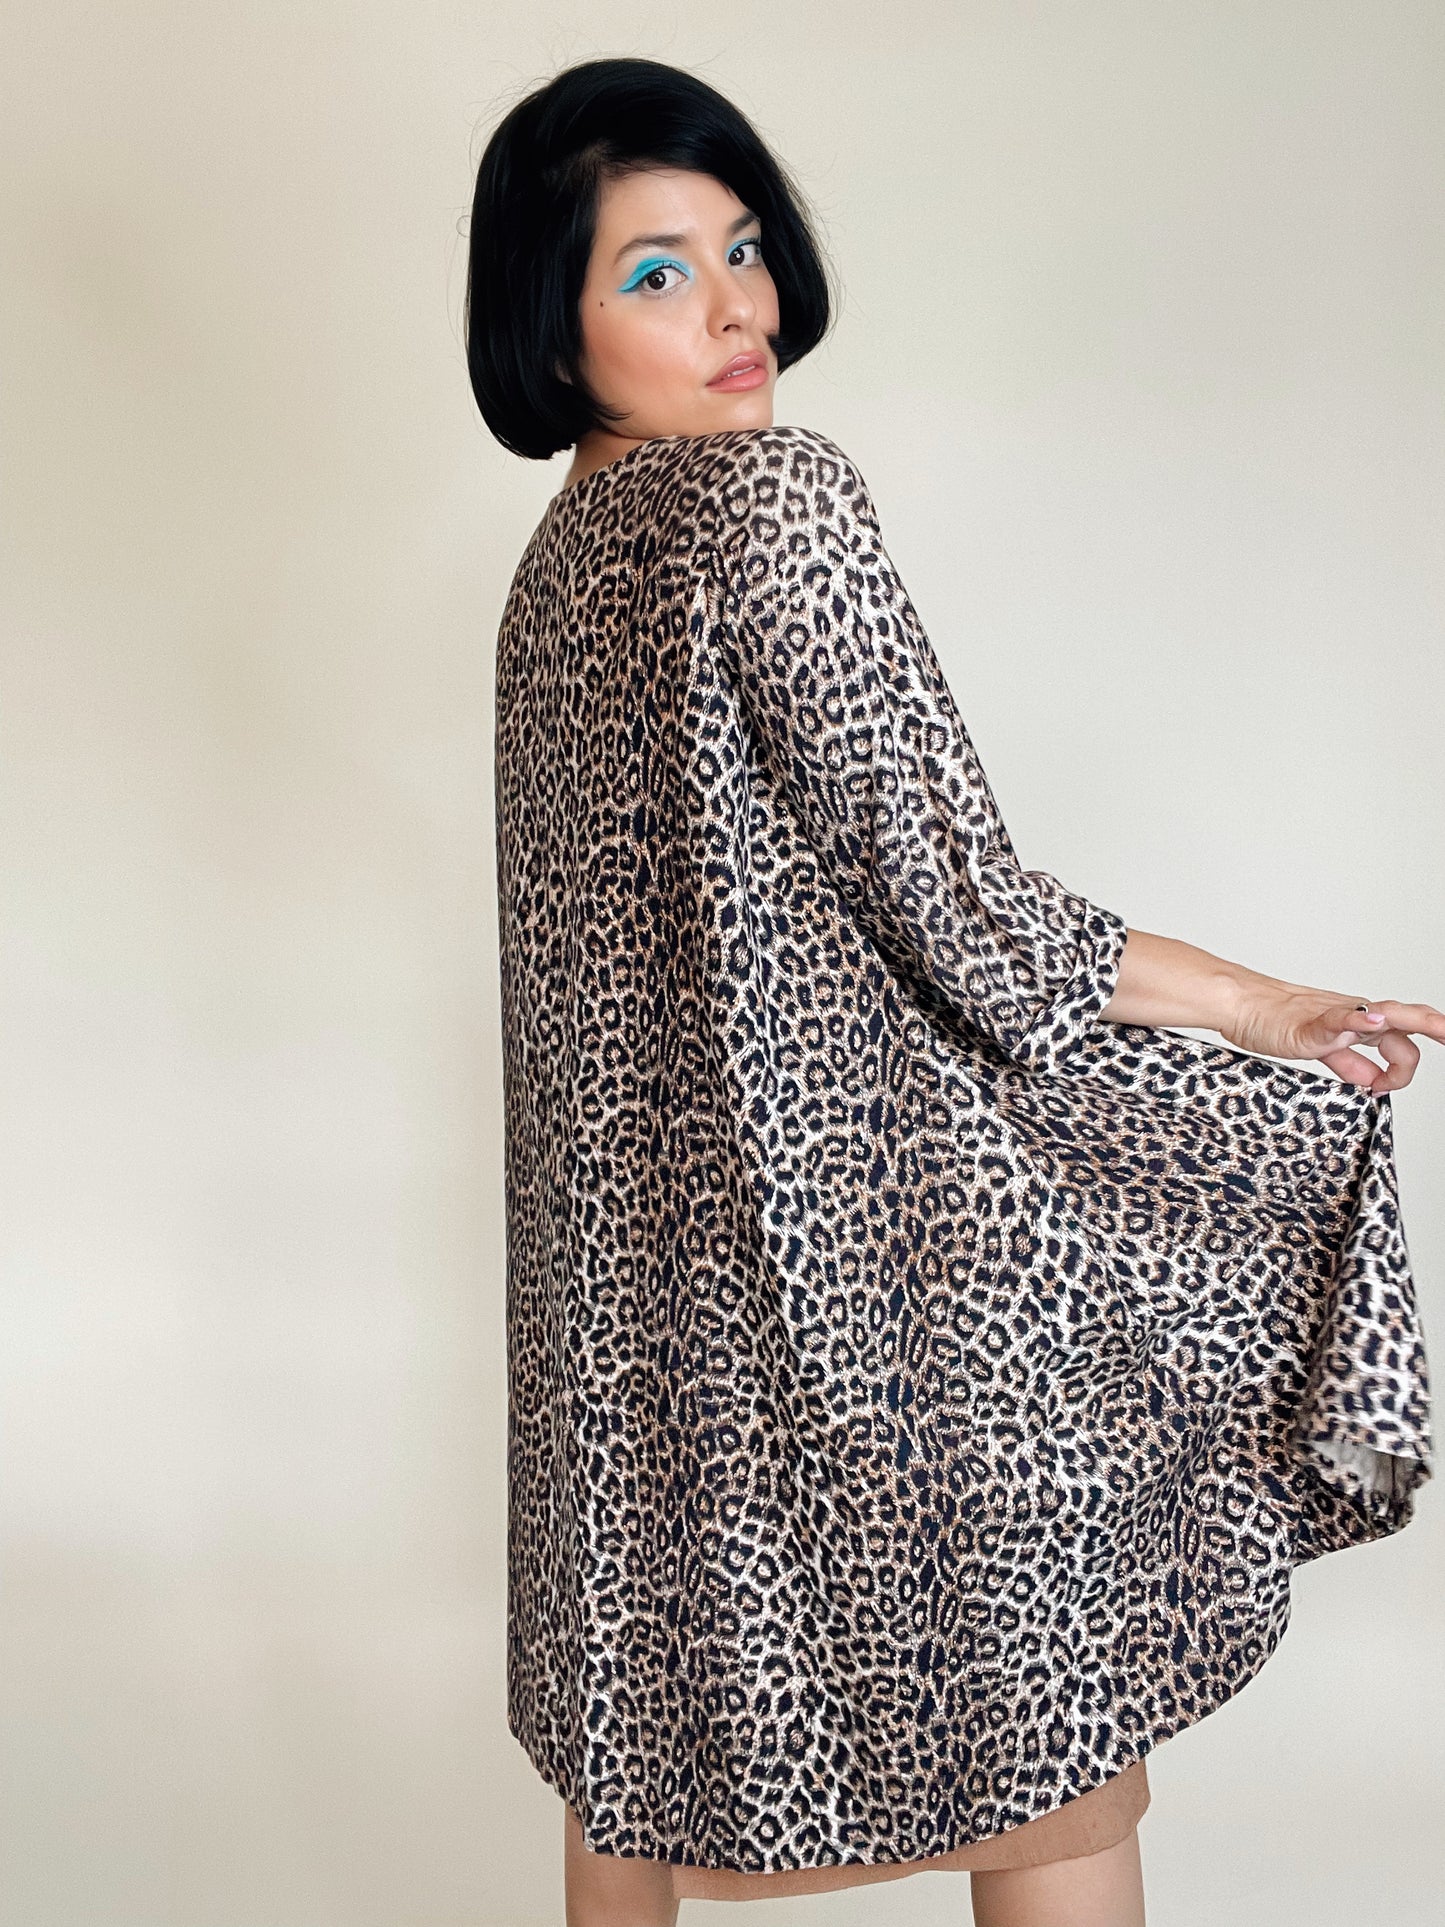 Vintage 60s Leopard Faux Animal Print Swing Coat Fits Sizes XS-M